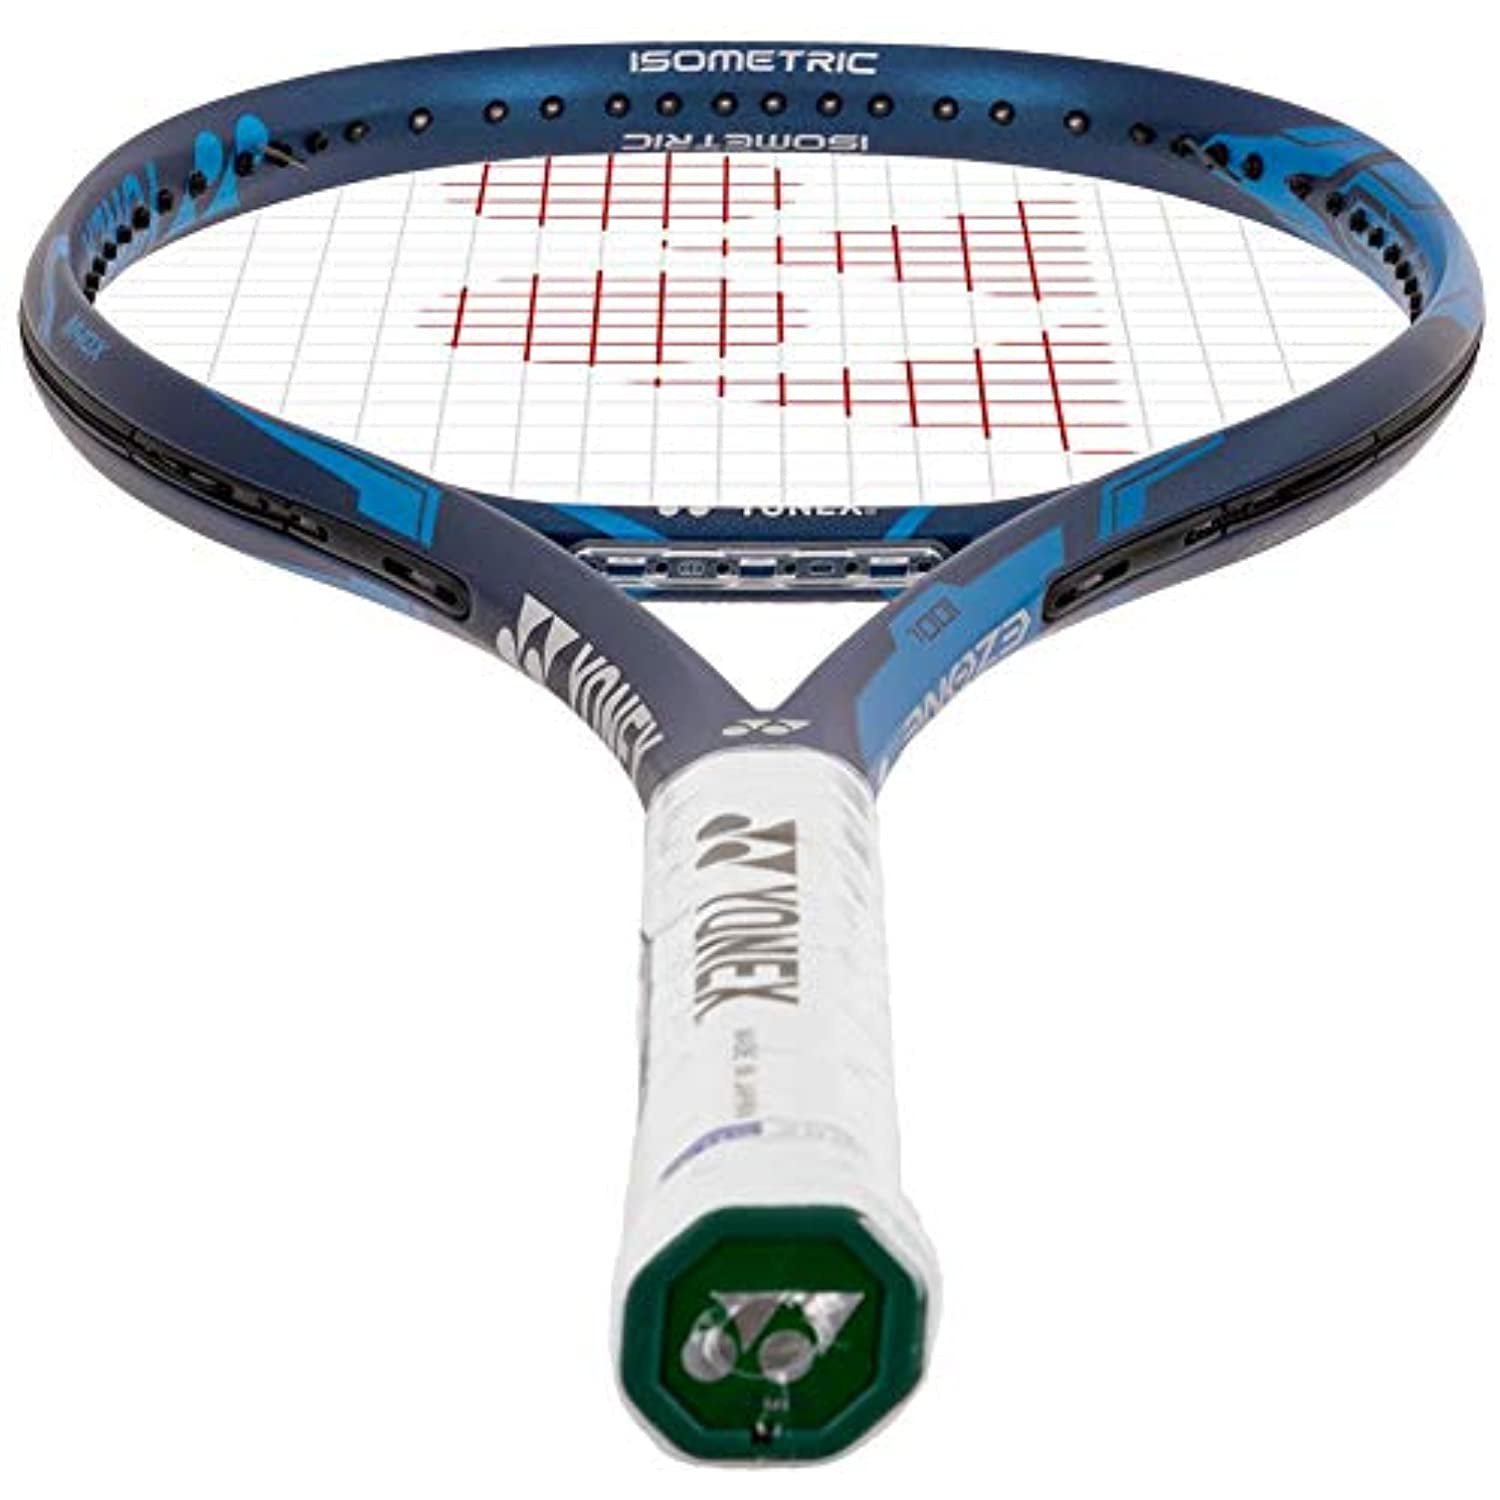 wilson pro staff tennis racket new excel 112, in packaging surplus stock 